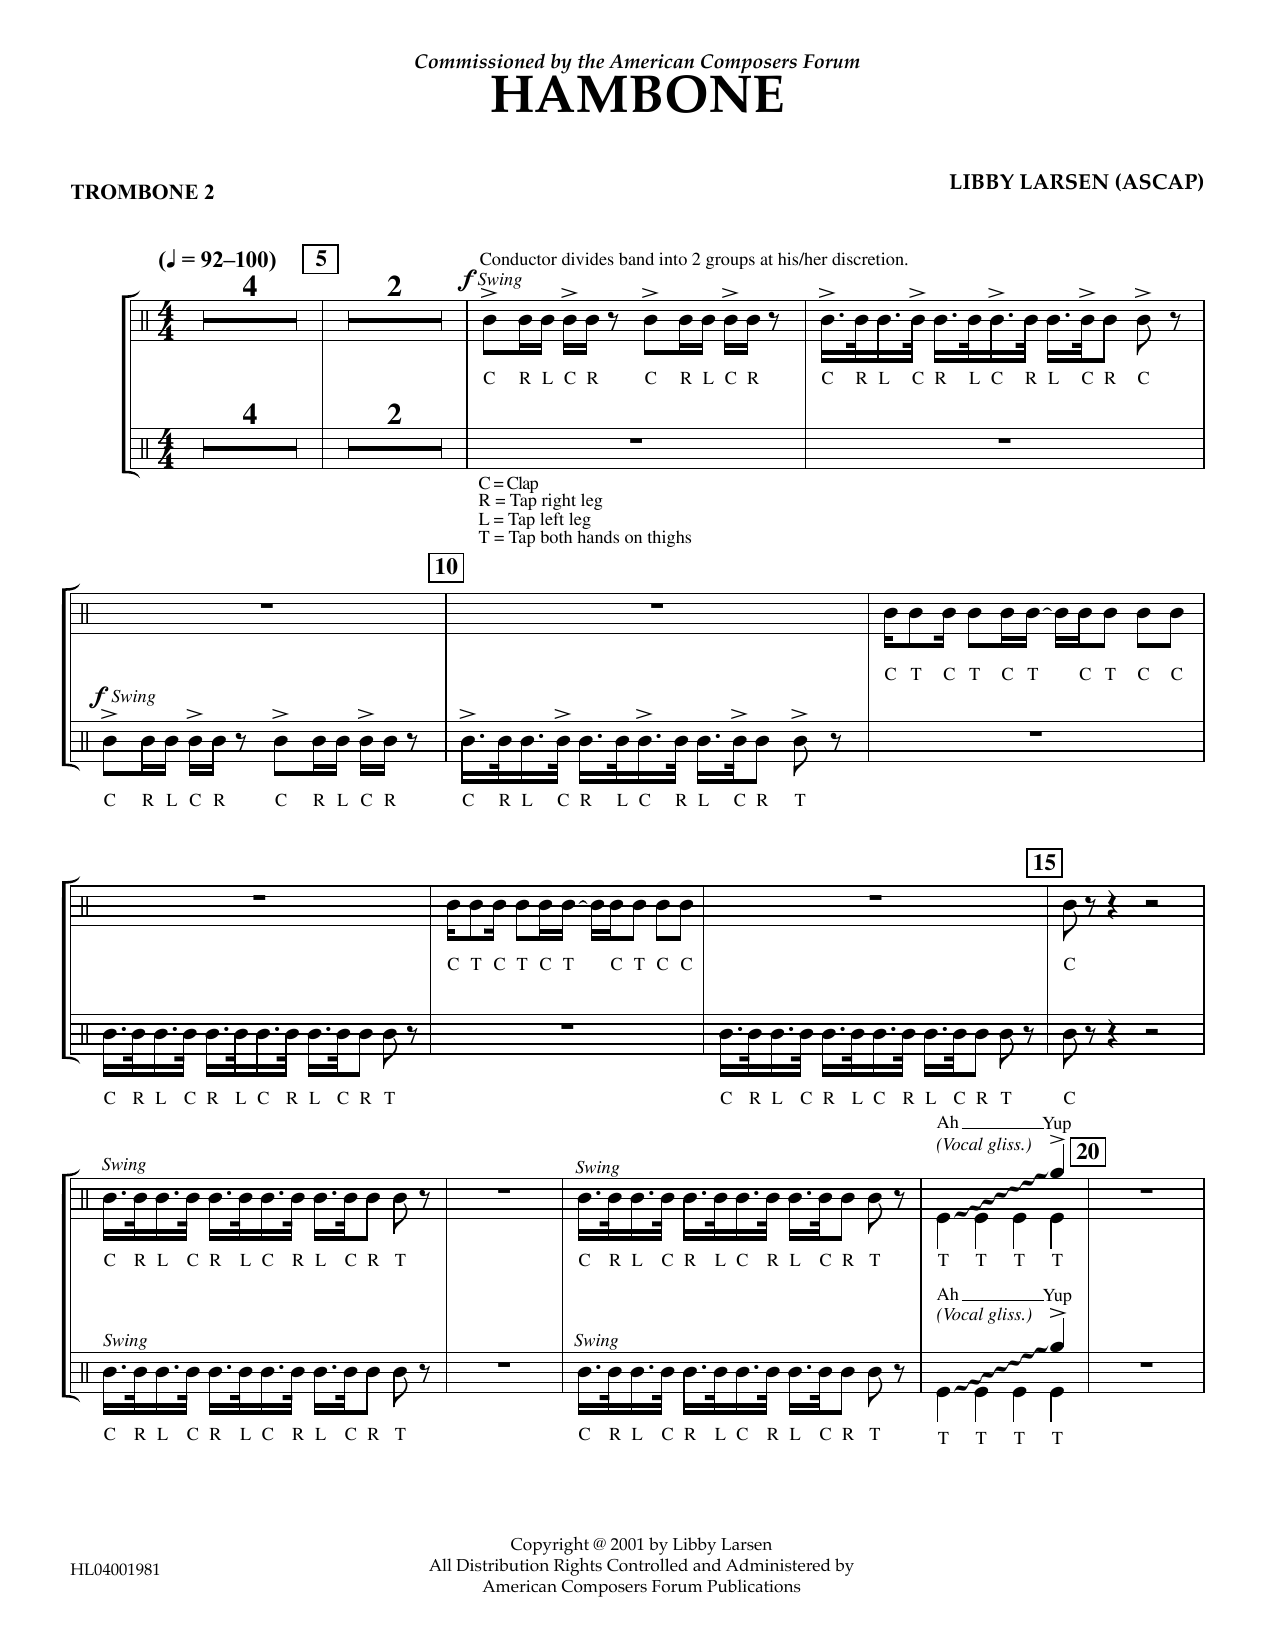 Libby Larsen Hambone - Trombone 2 Sheet Music Notes & Chords for Concert Band - Download or Print PDF